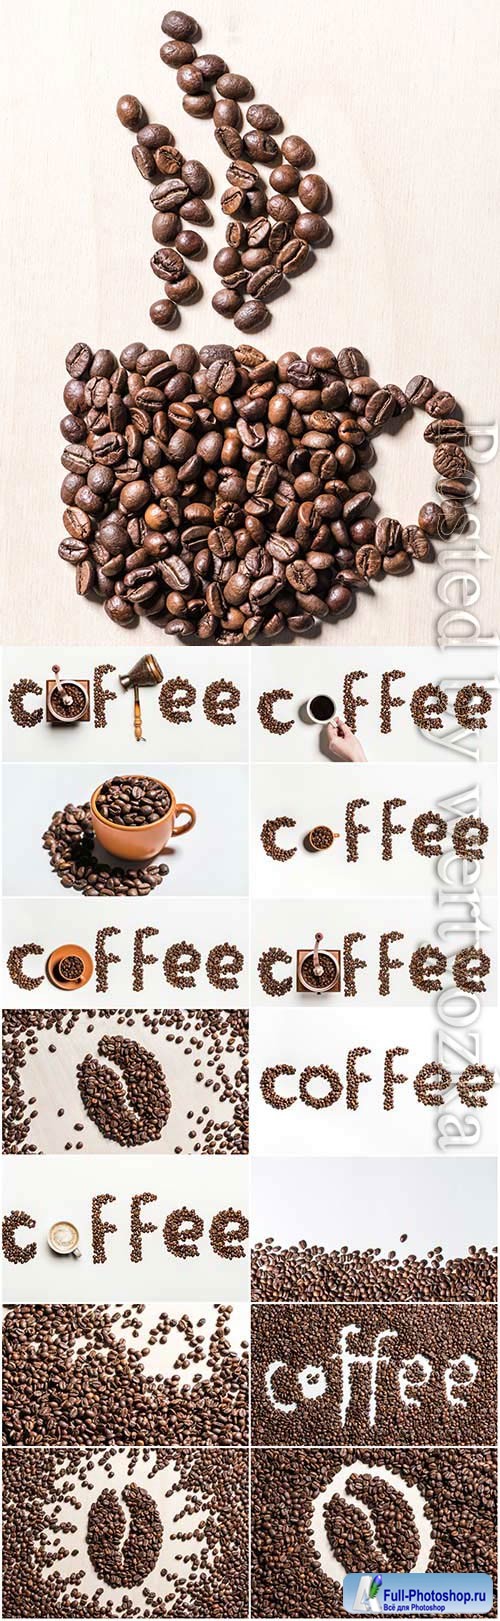 Creative photo with coffee beans stock photo